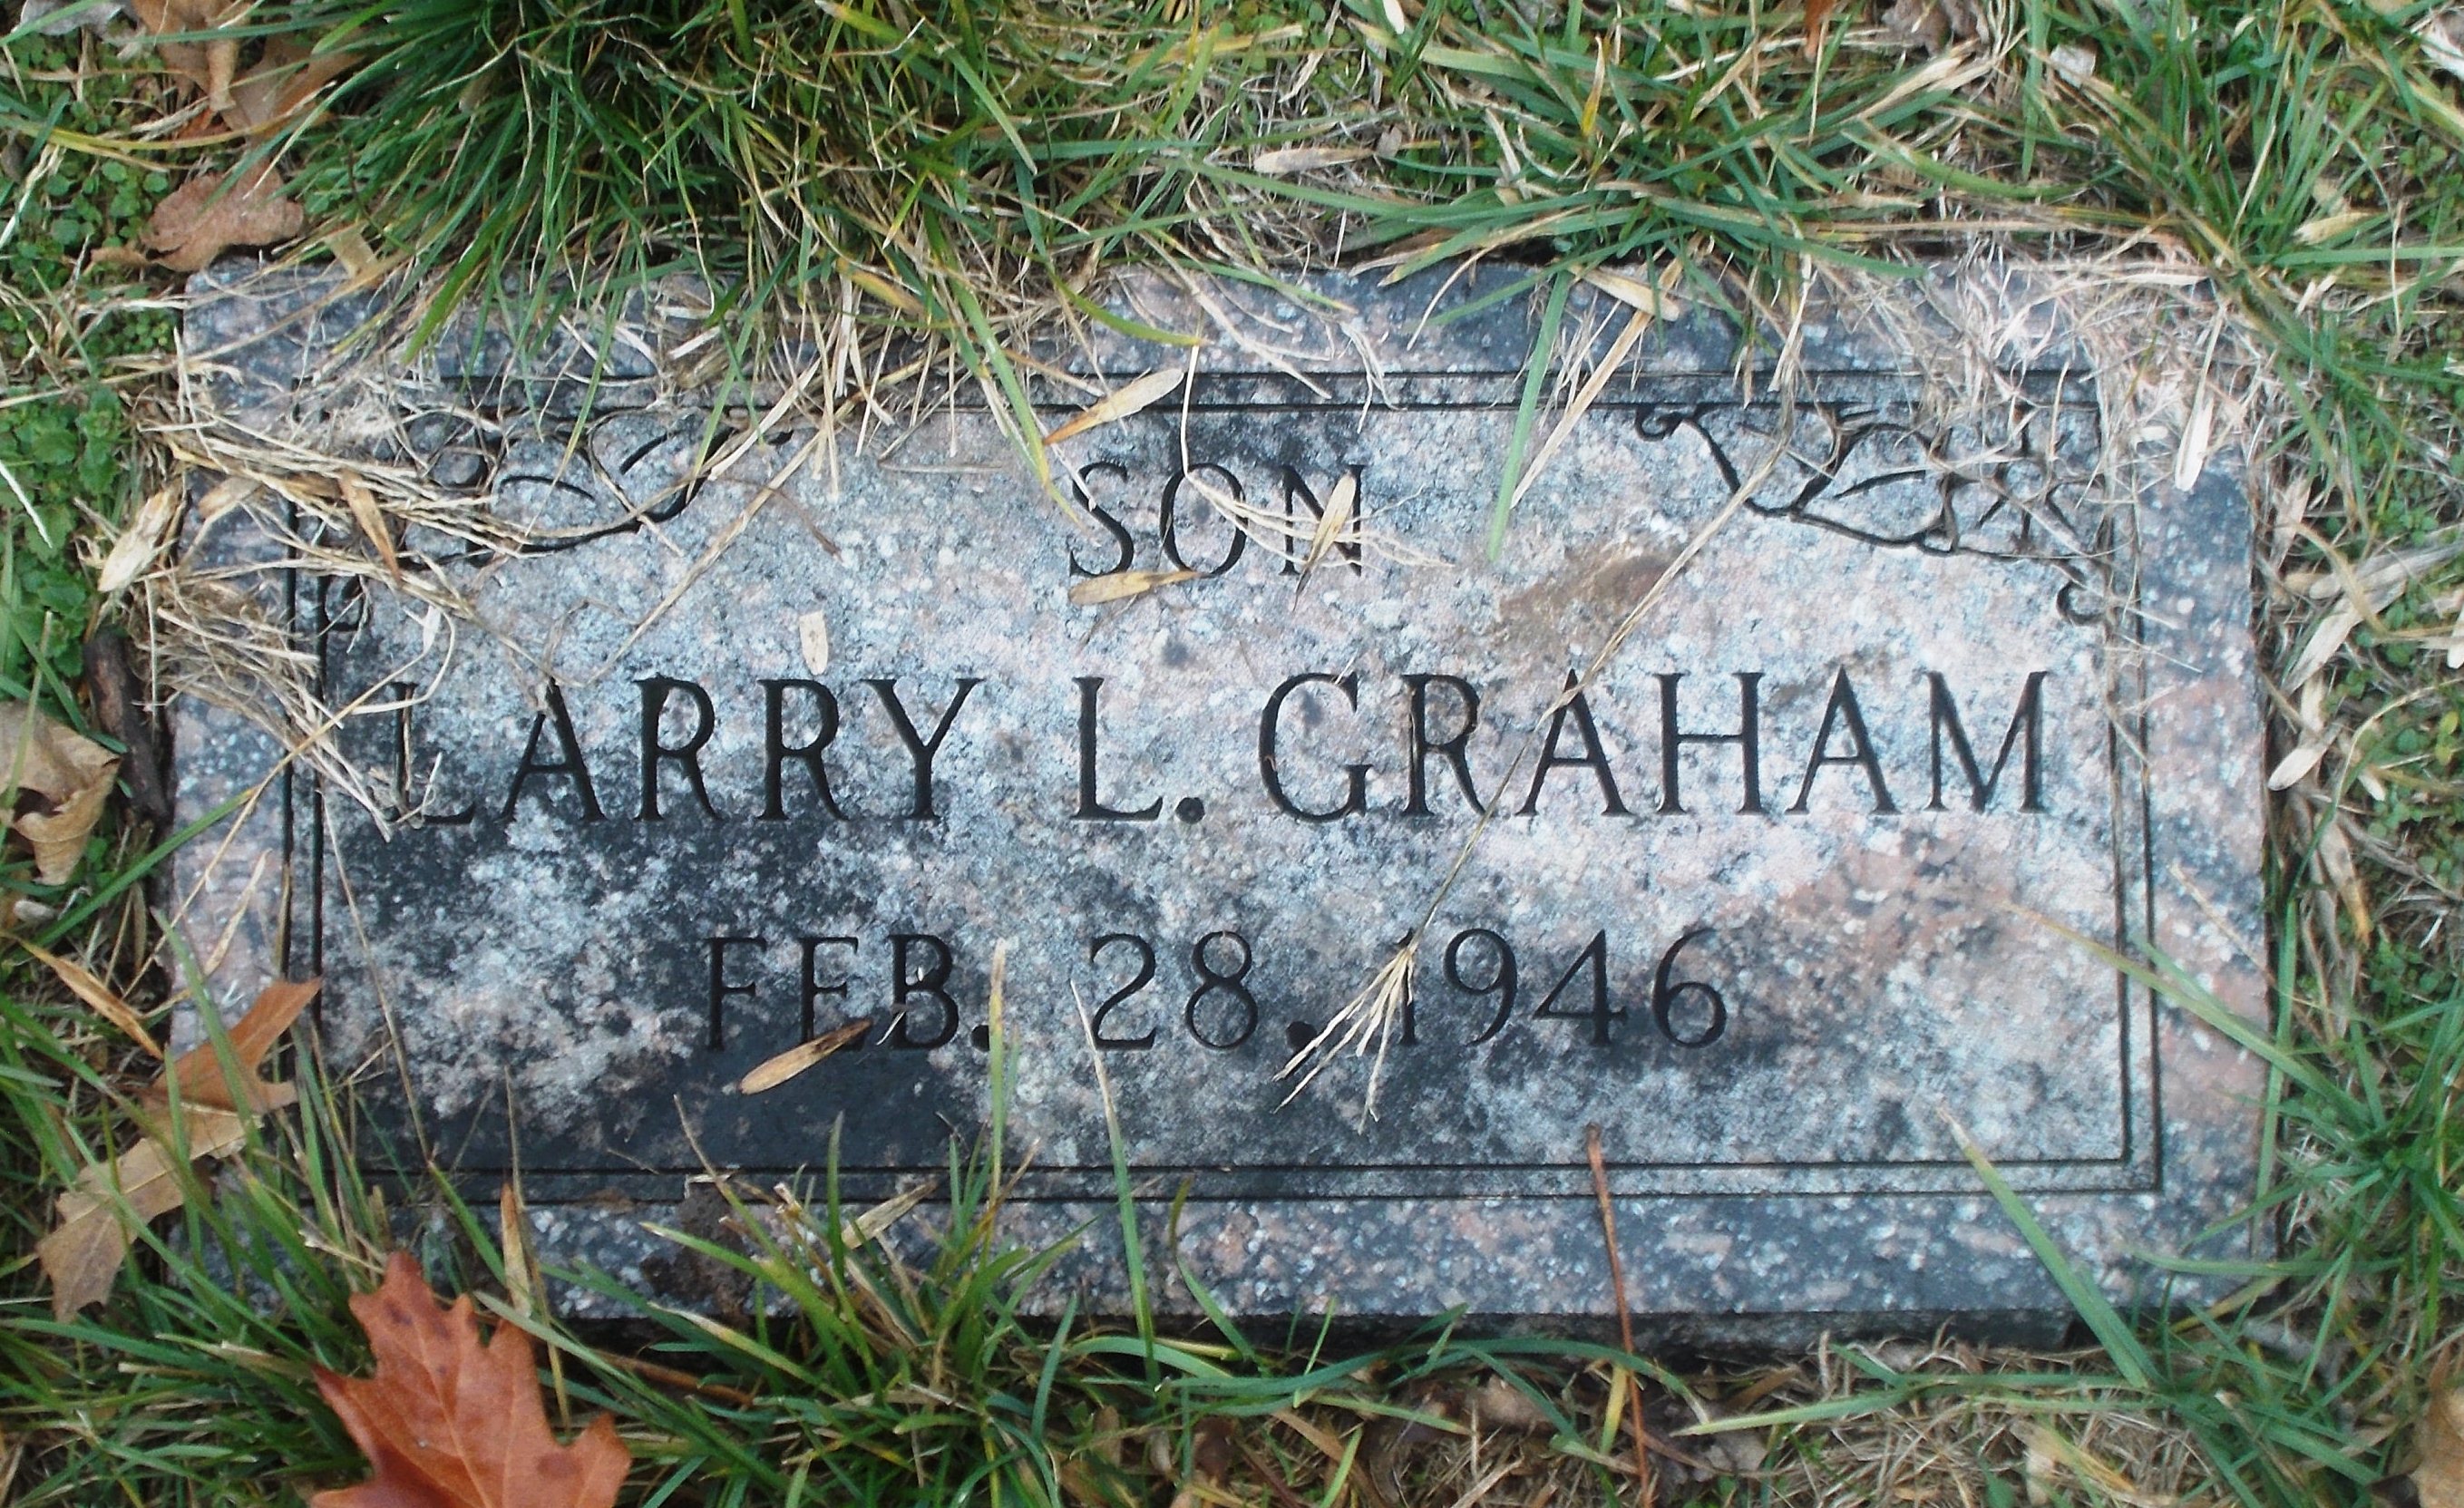 Larry L Graham